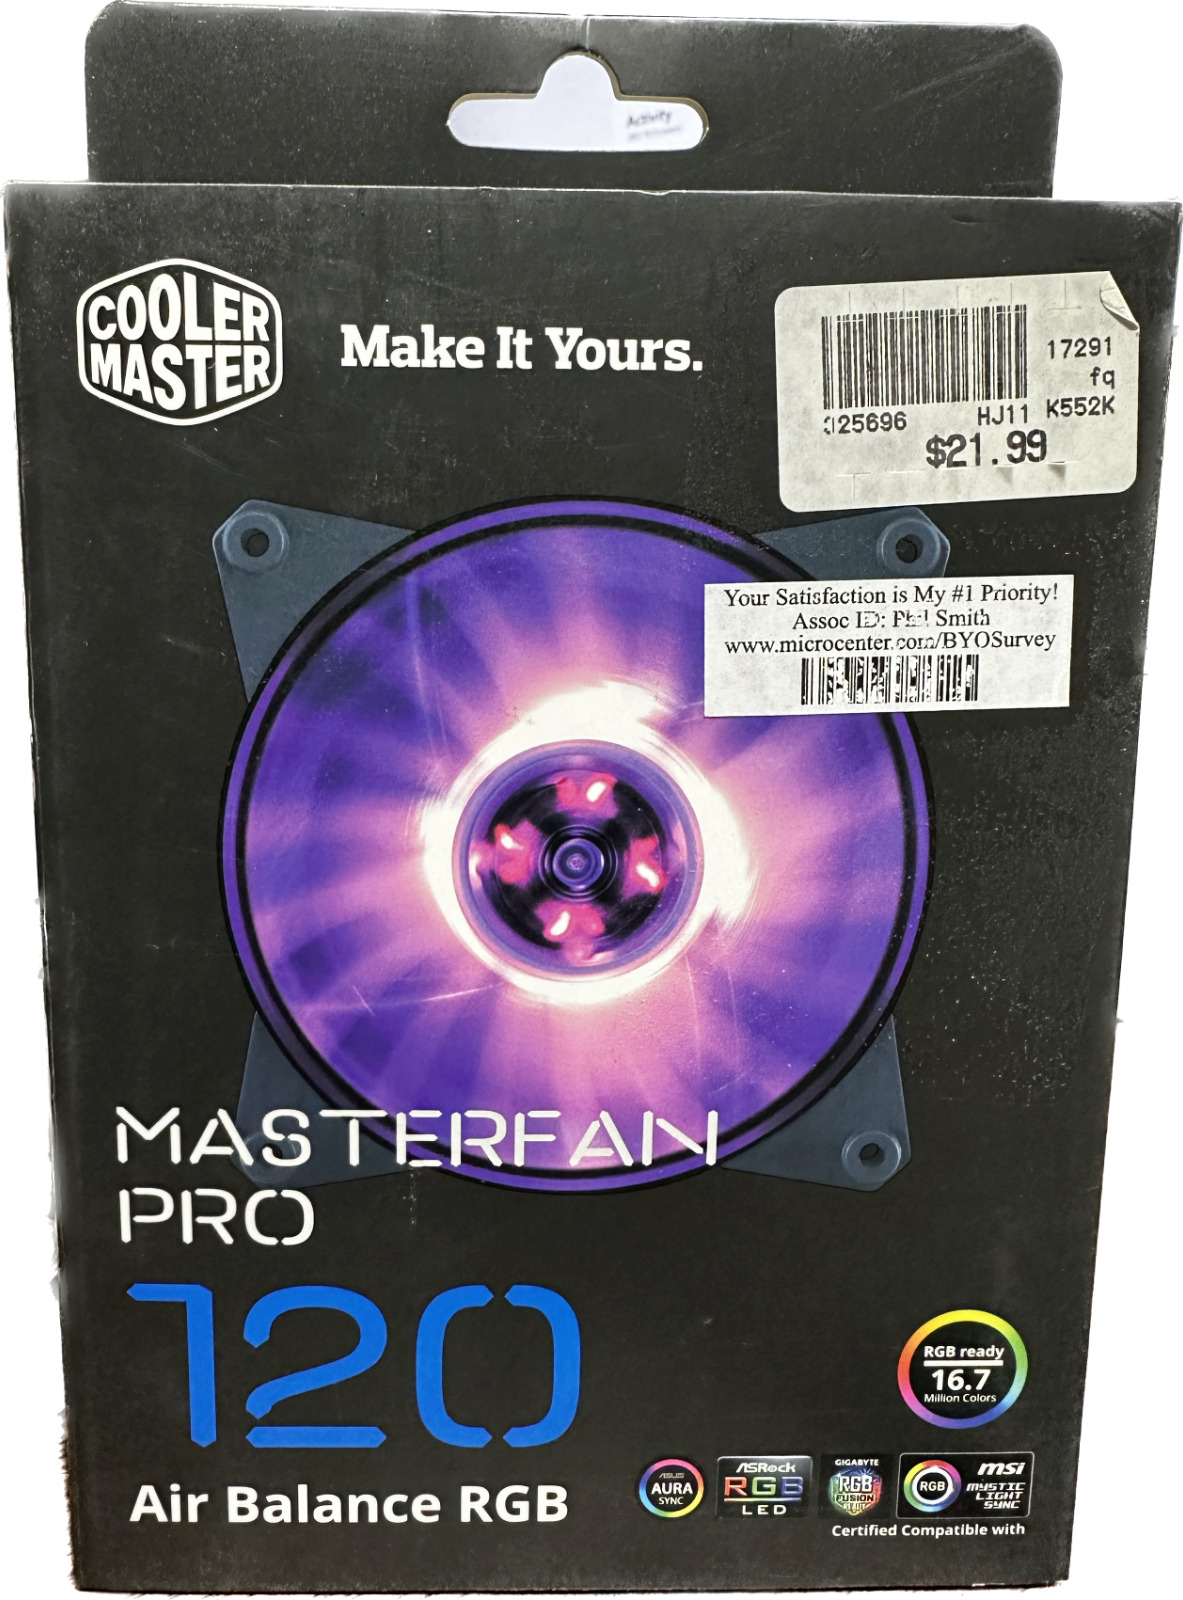 Cooler Master Master fan Pro 120 Air Balance RGB LED PC Fan 42.7CFM 12VDC 0.32A